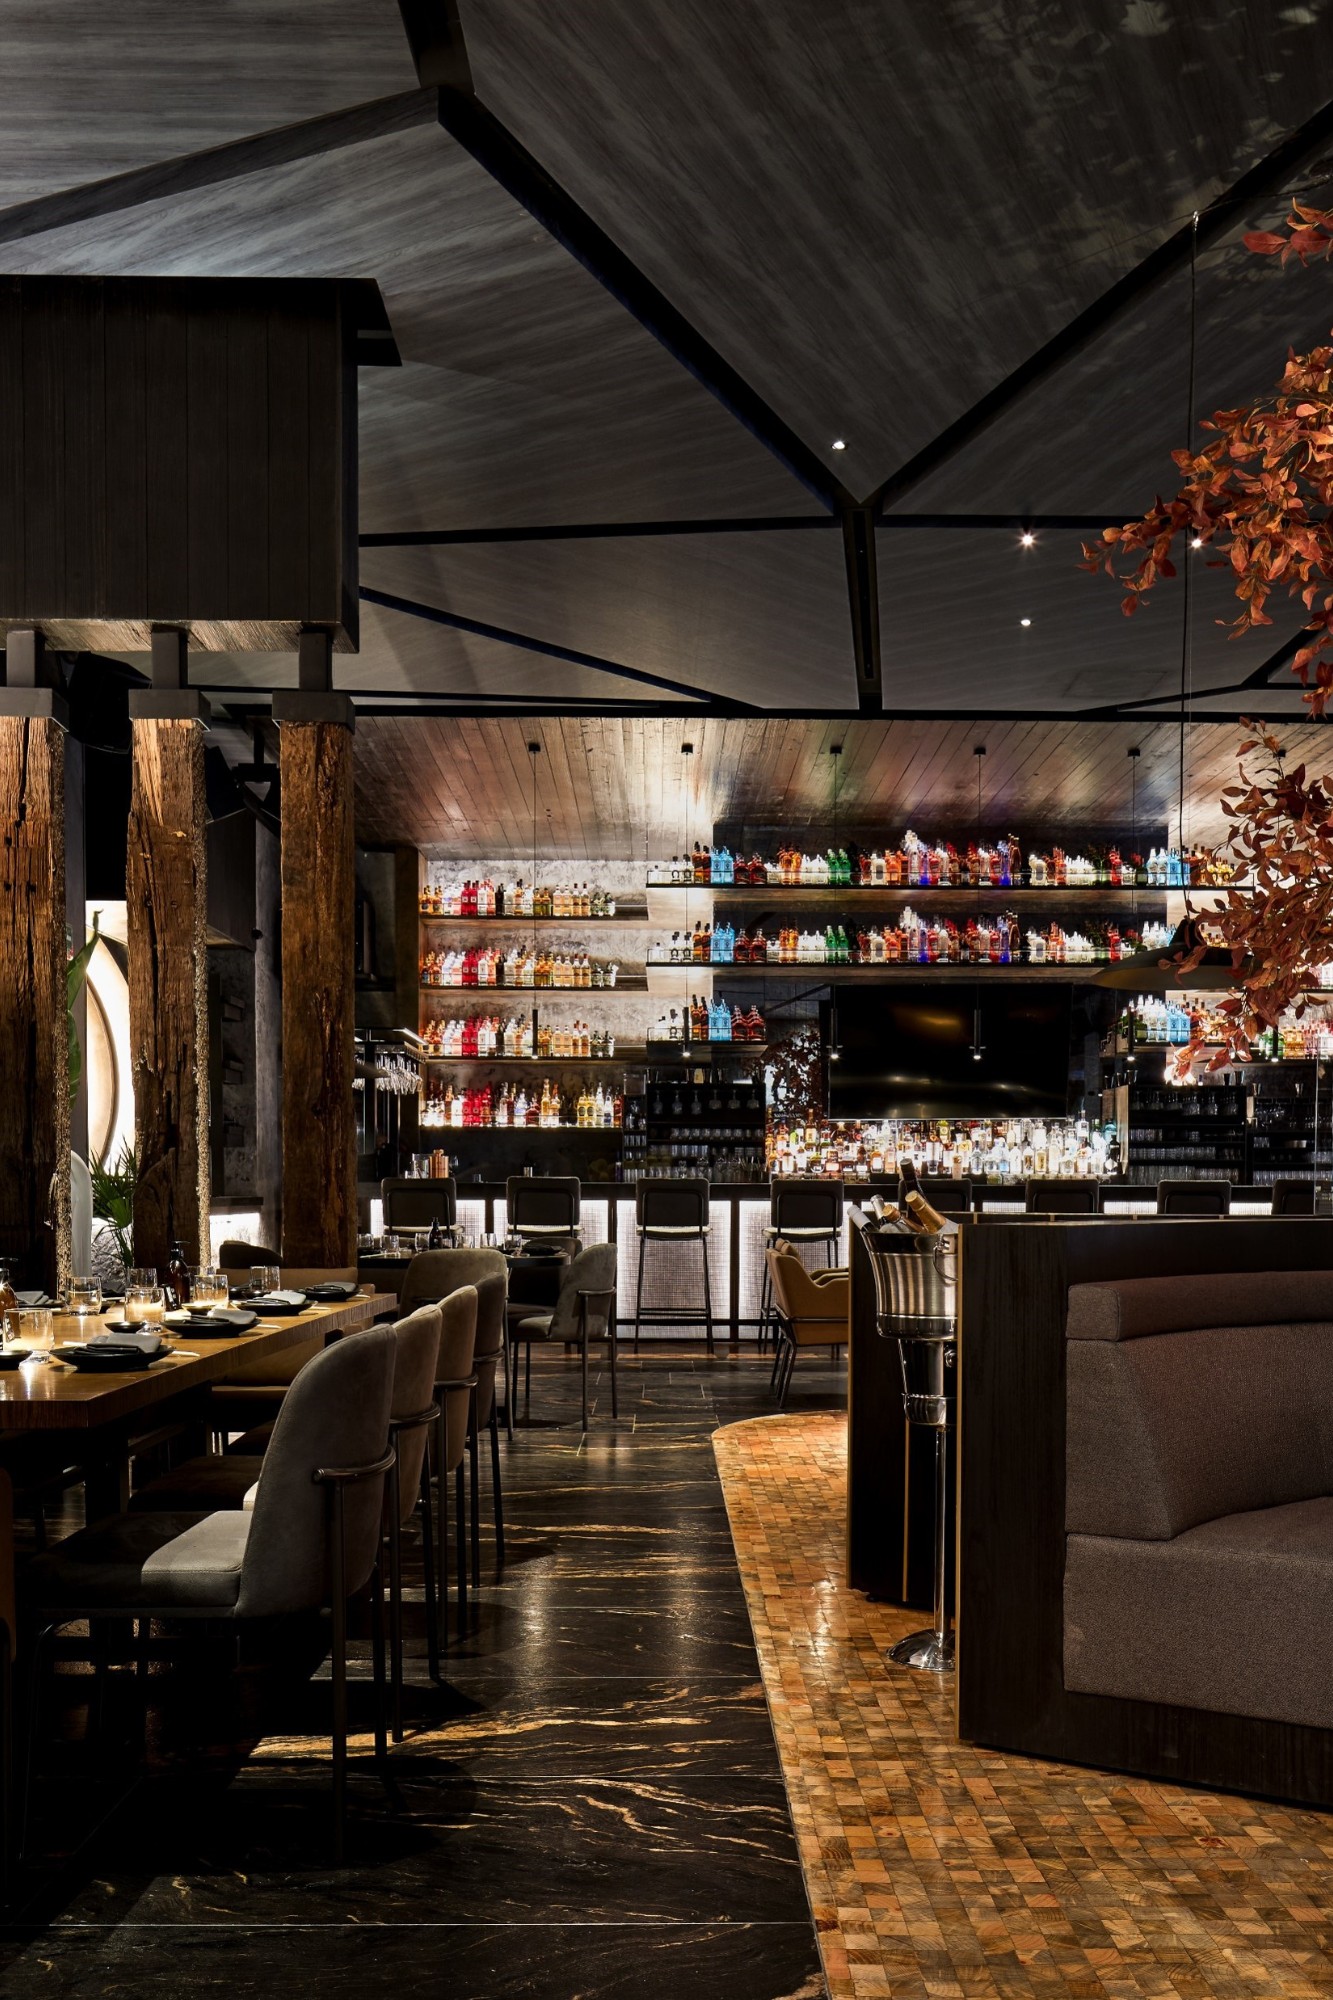 Neiman Marcus uses creativity to resurrect its restaurant business